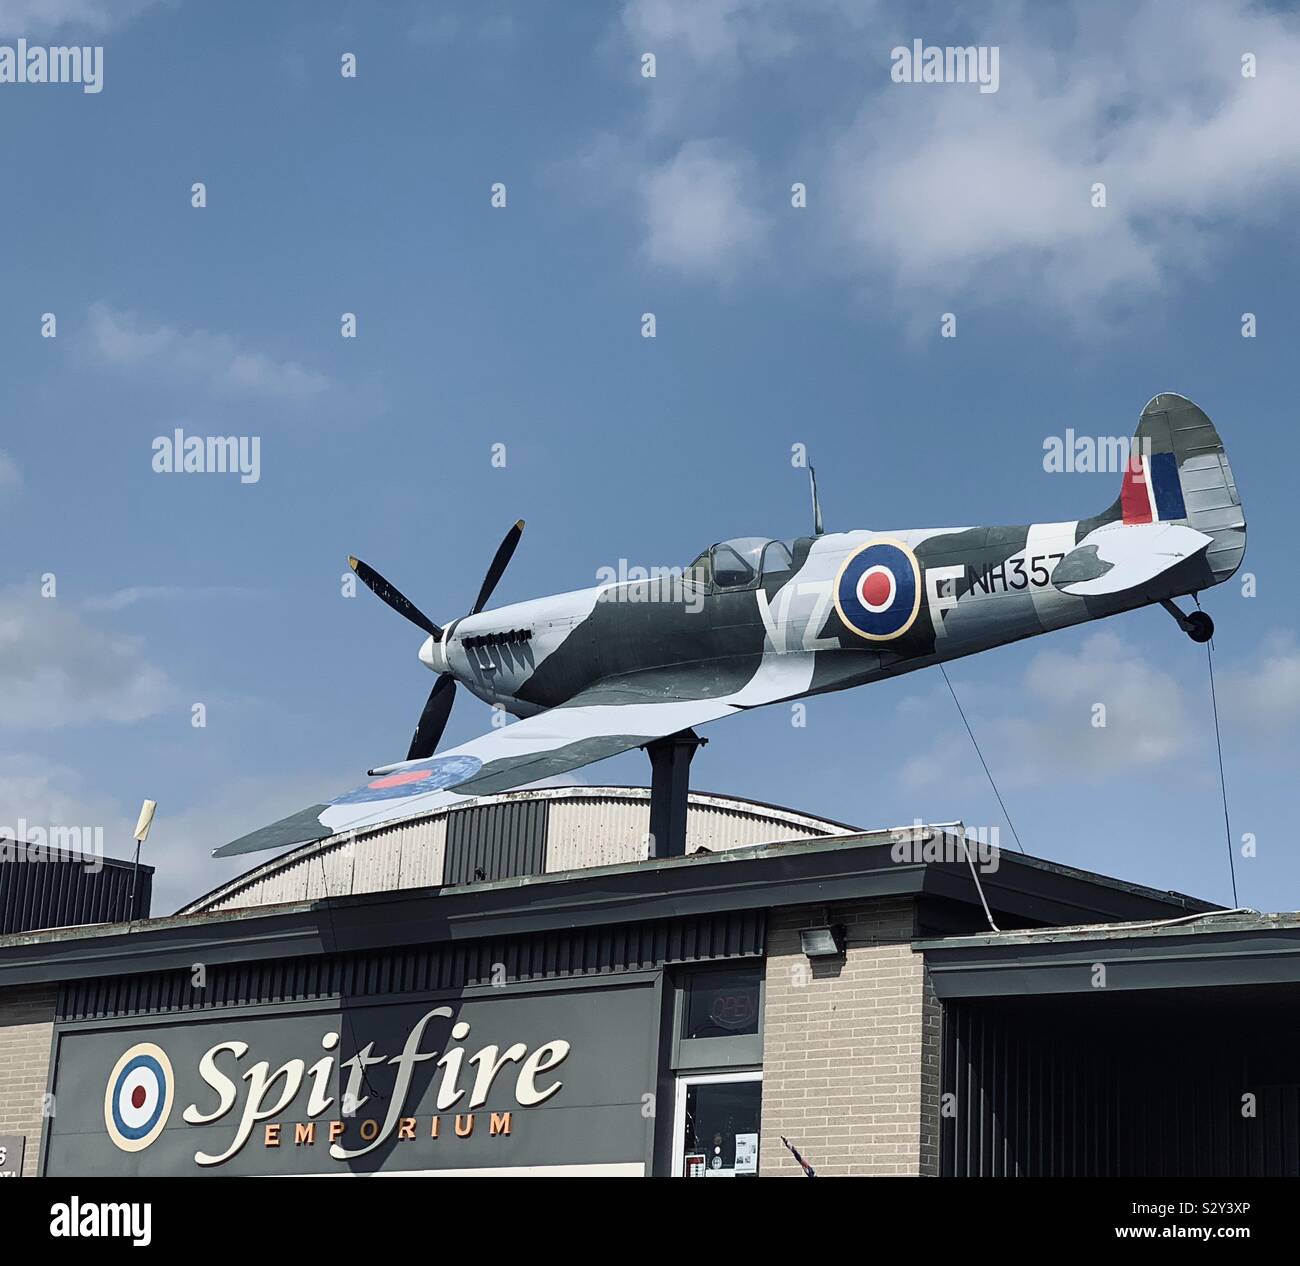 Spitfire Emporium in Kitchener, Ontario Stock Photo